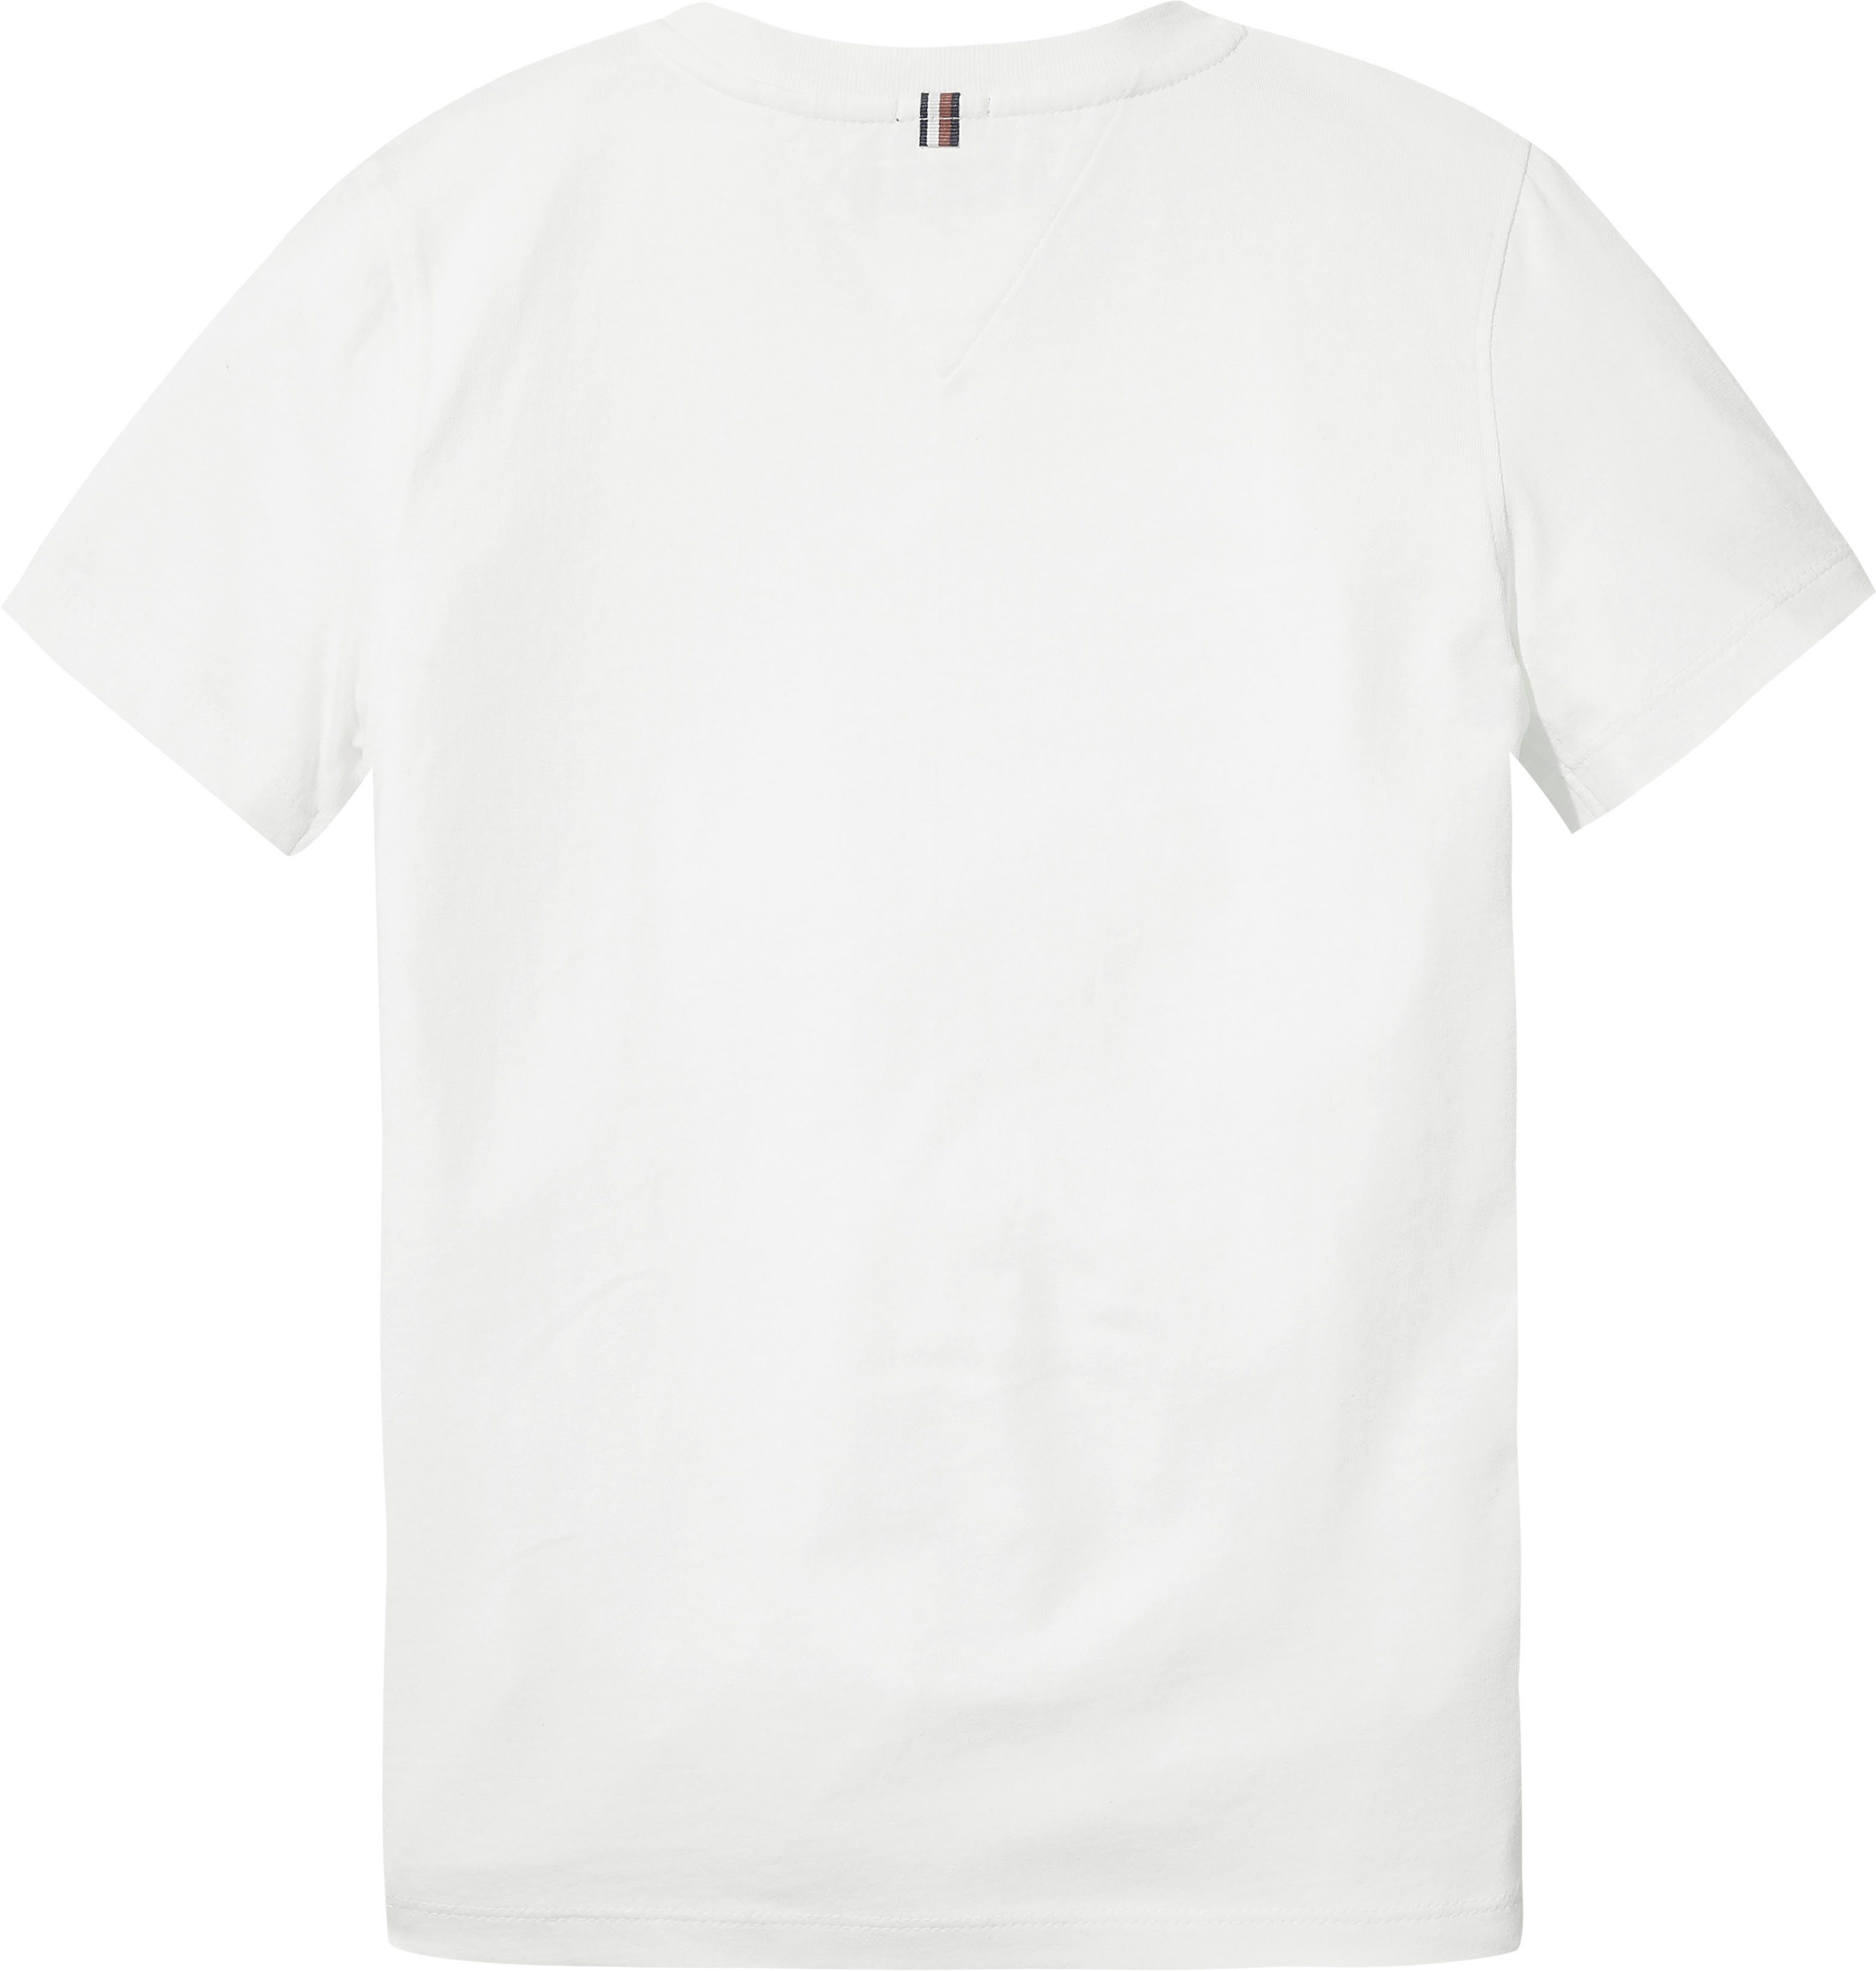 Tommy Hilfiger T-Shirt BOYS CN Kids Kinder MiniMe Junior KNIT BASIC